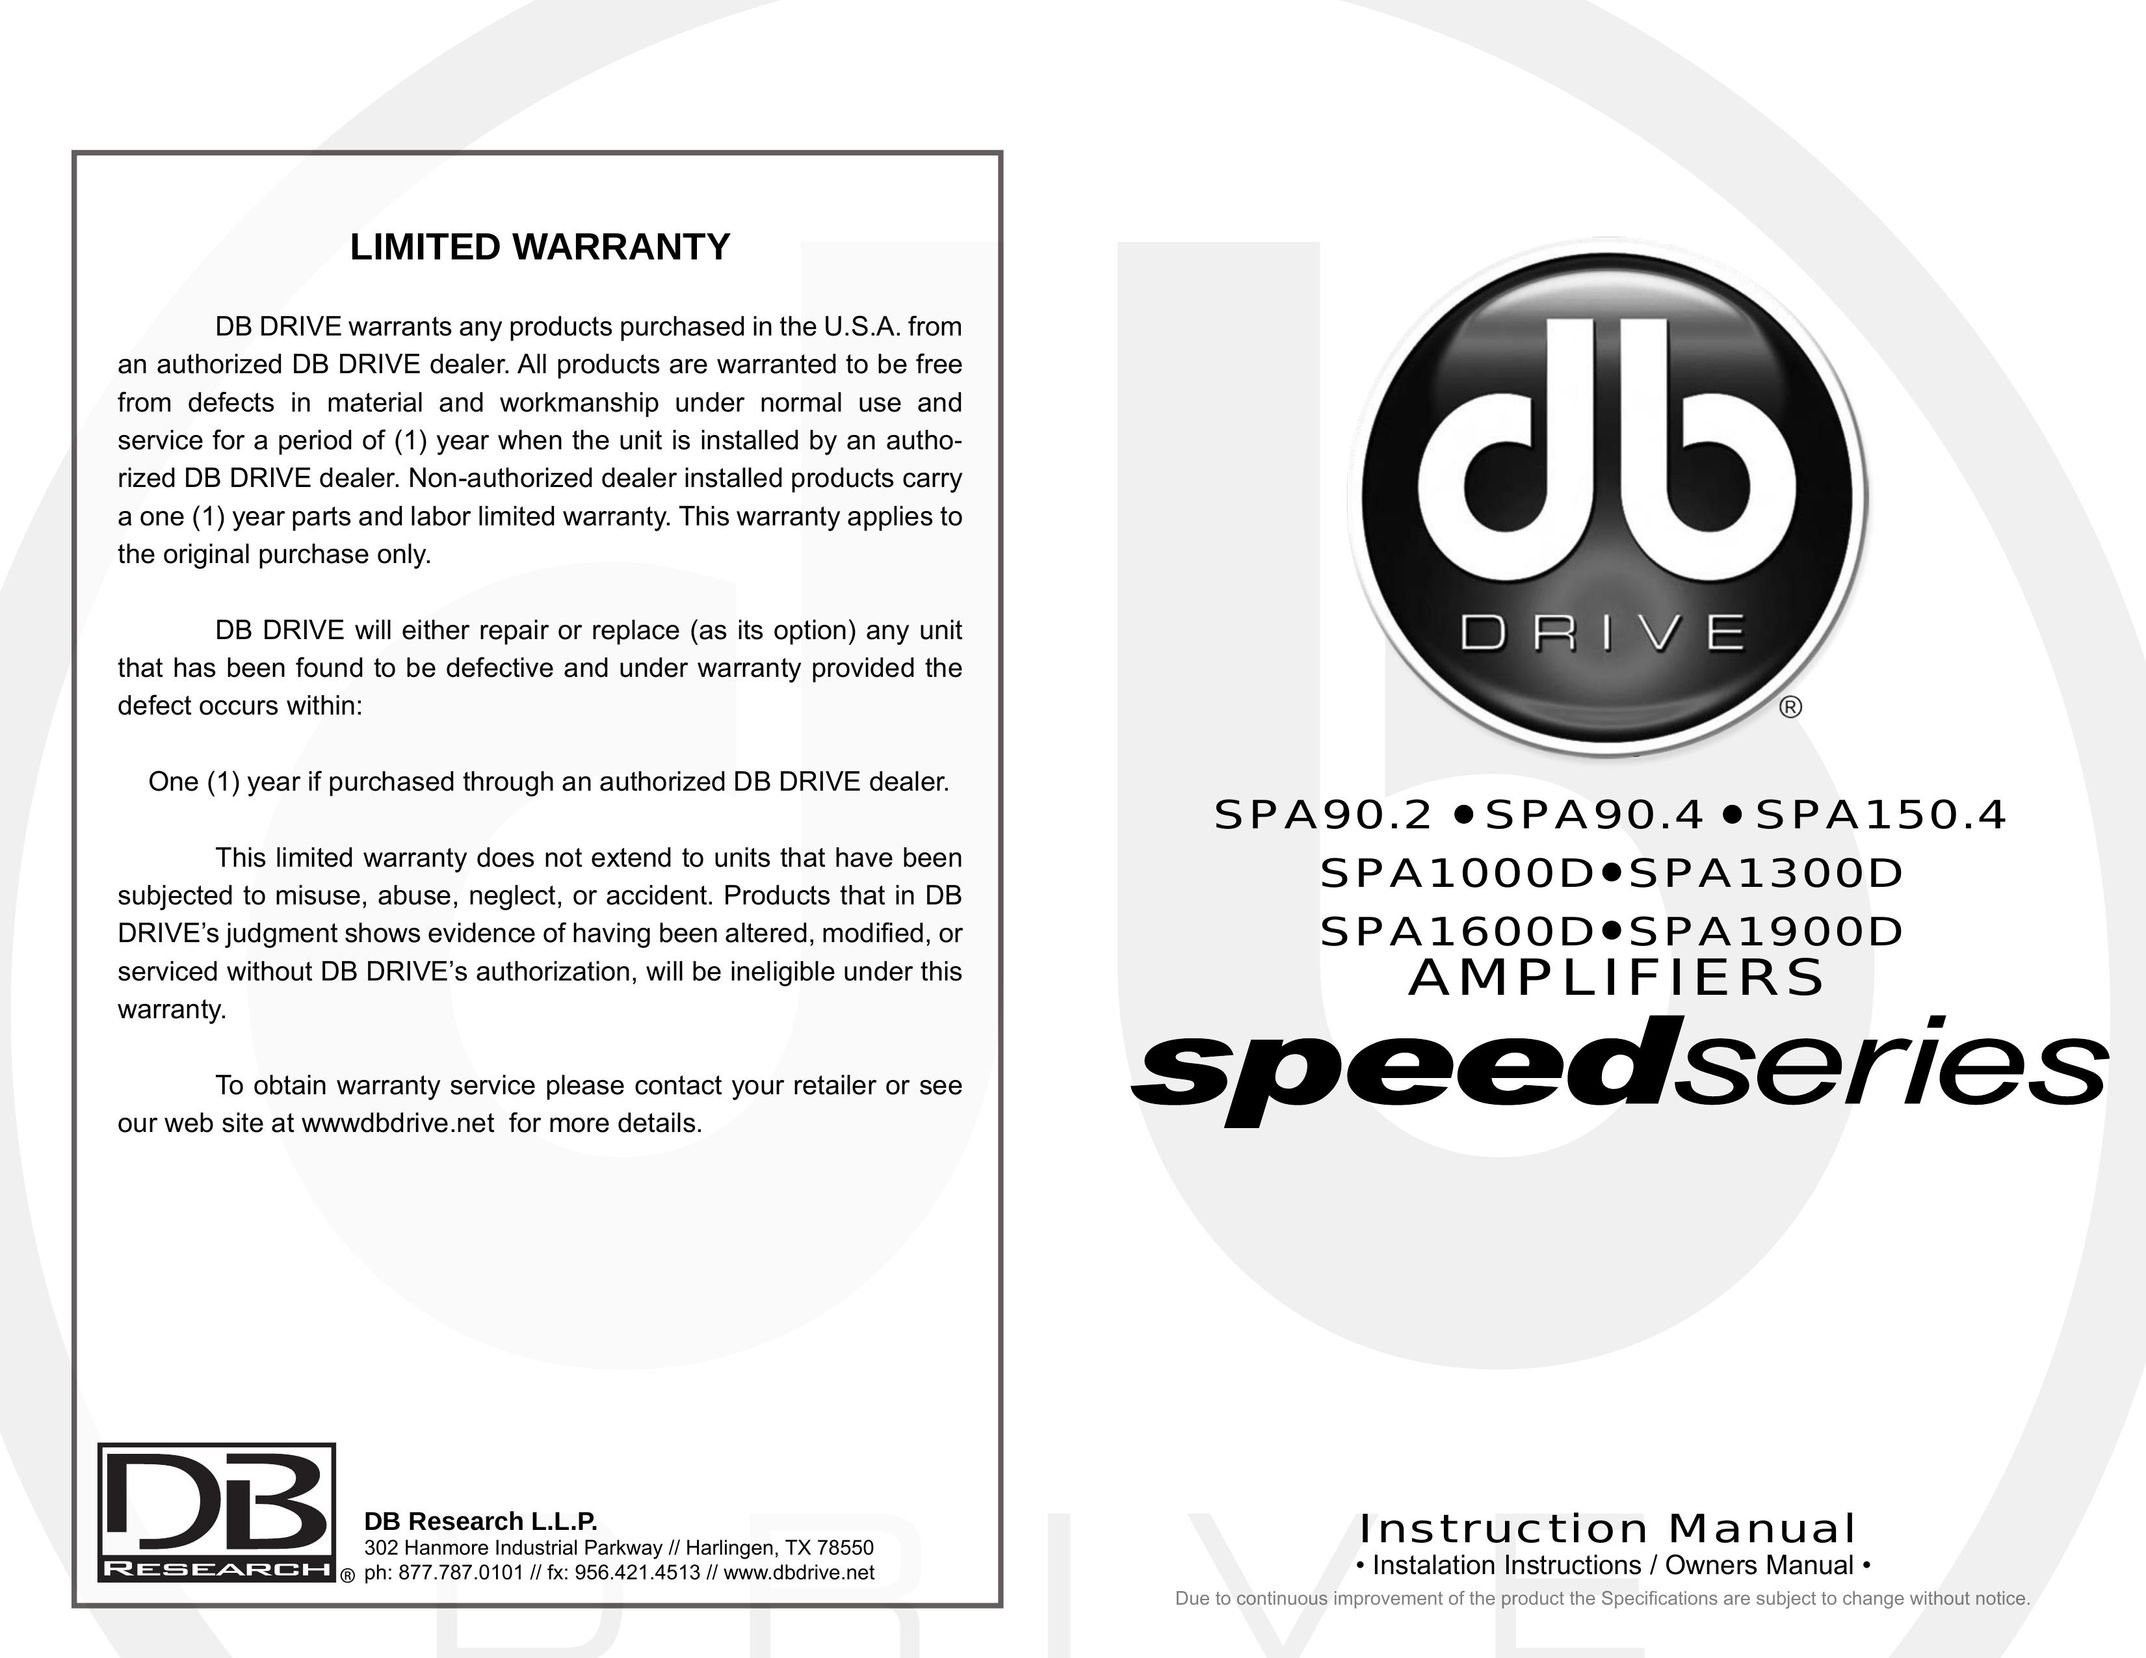 Broan SPA1600D Car Amplifier User Manual